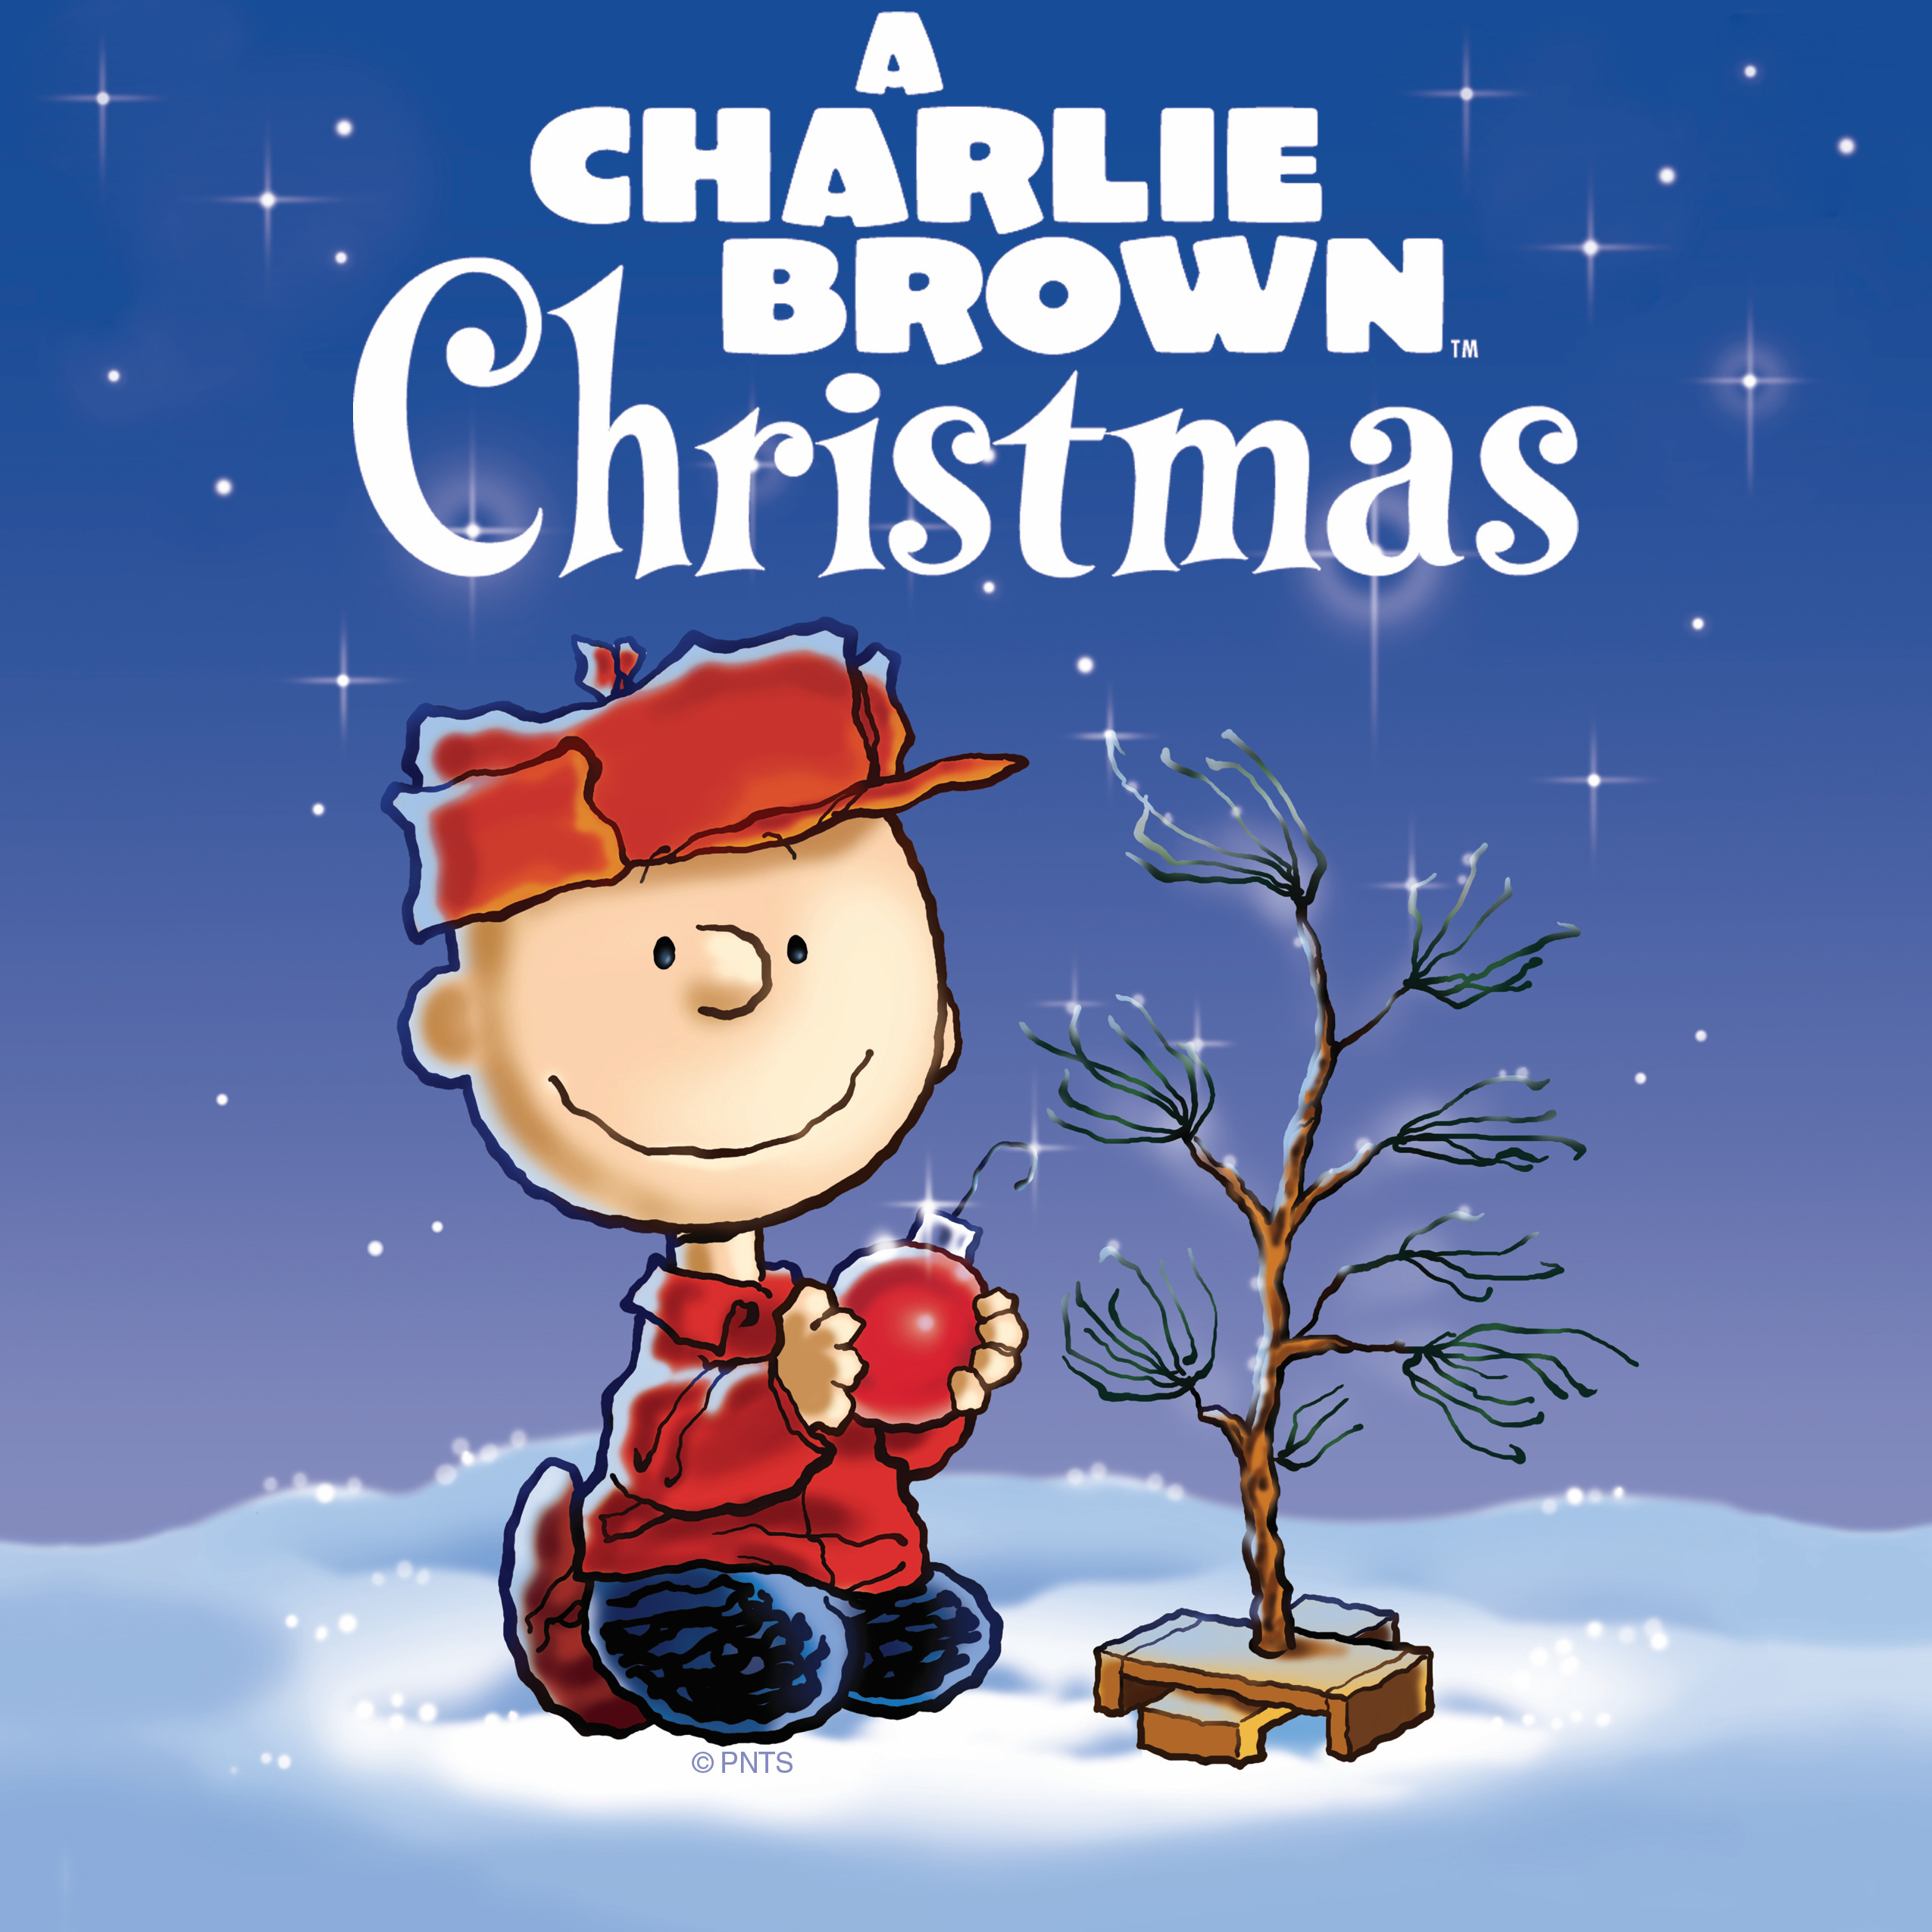 Charlie Brown Christmas Images Full Desktop Backgrounds